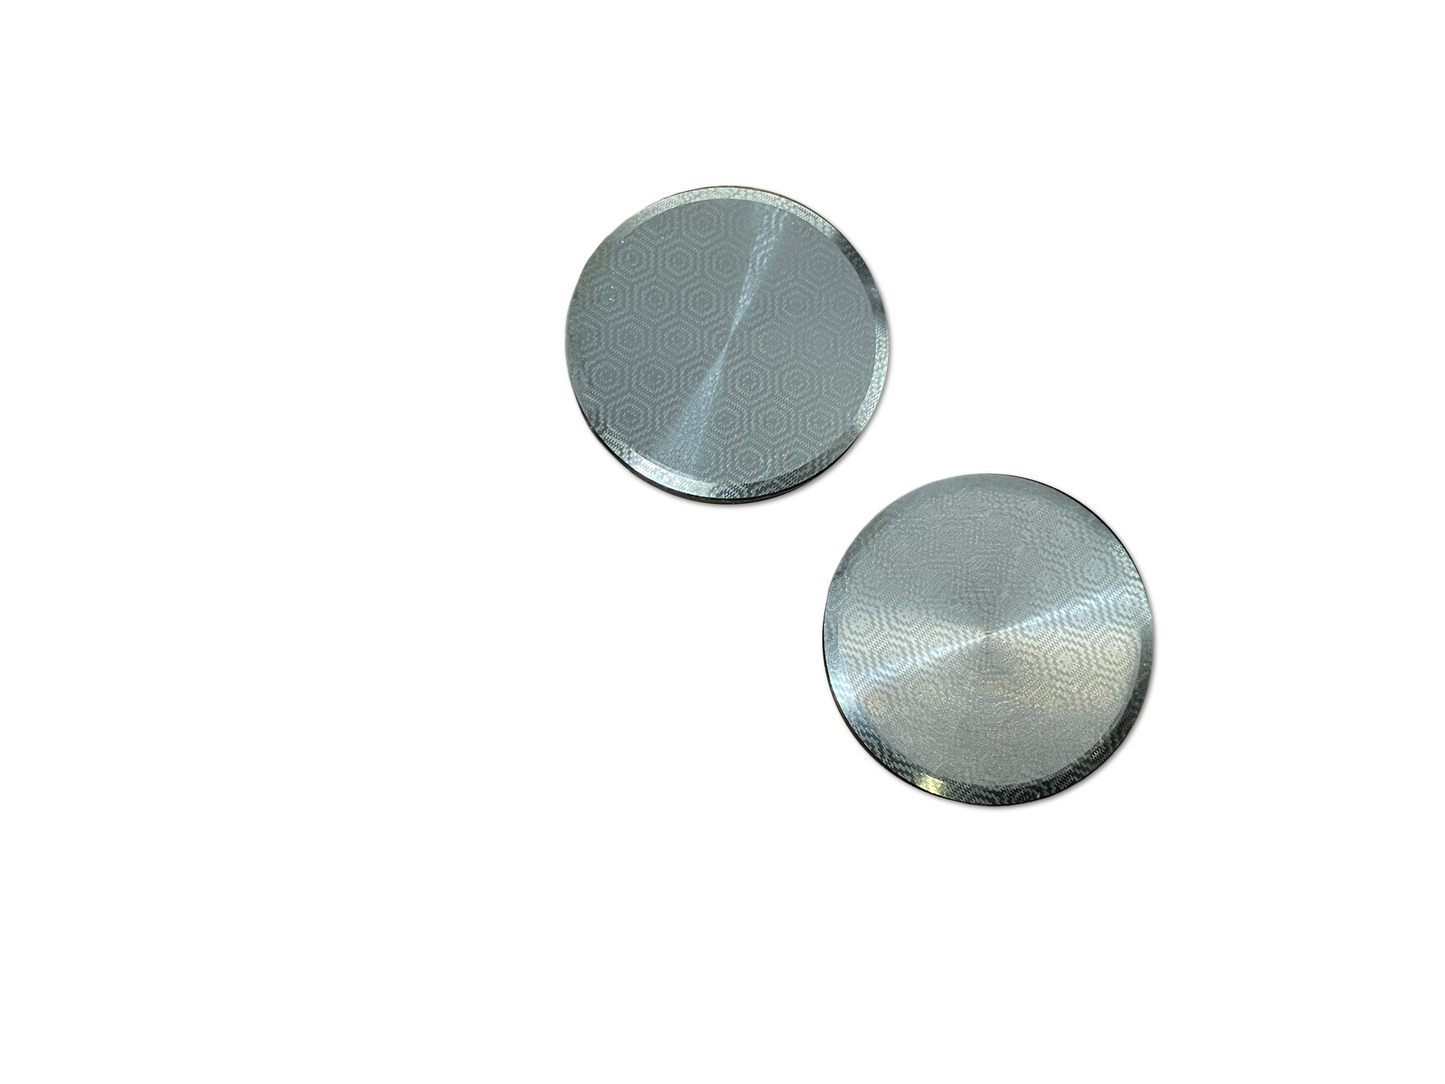 HONEYCOMB engraved Black Zirconium CLICKY HAPTIC Coins Fidget